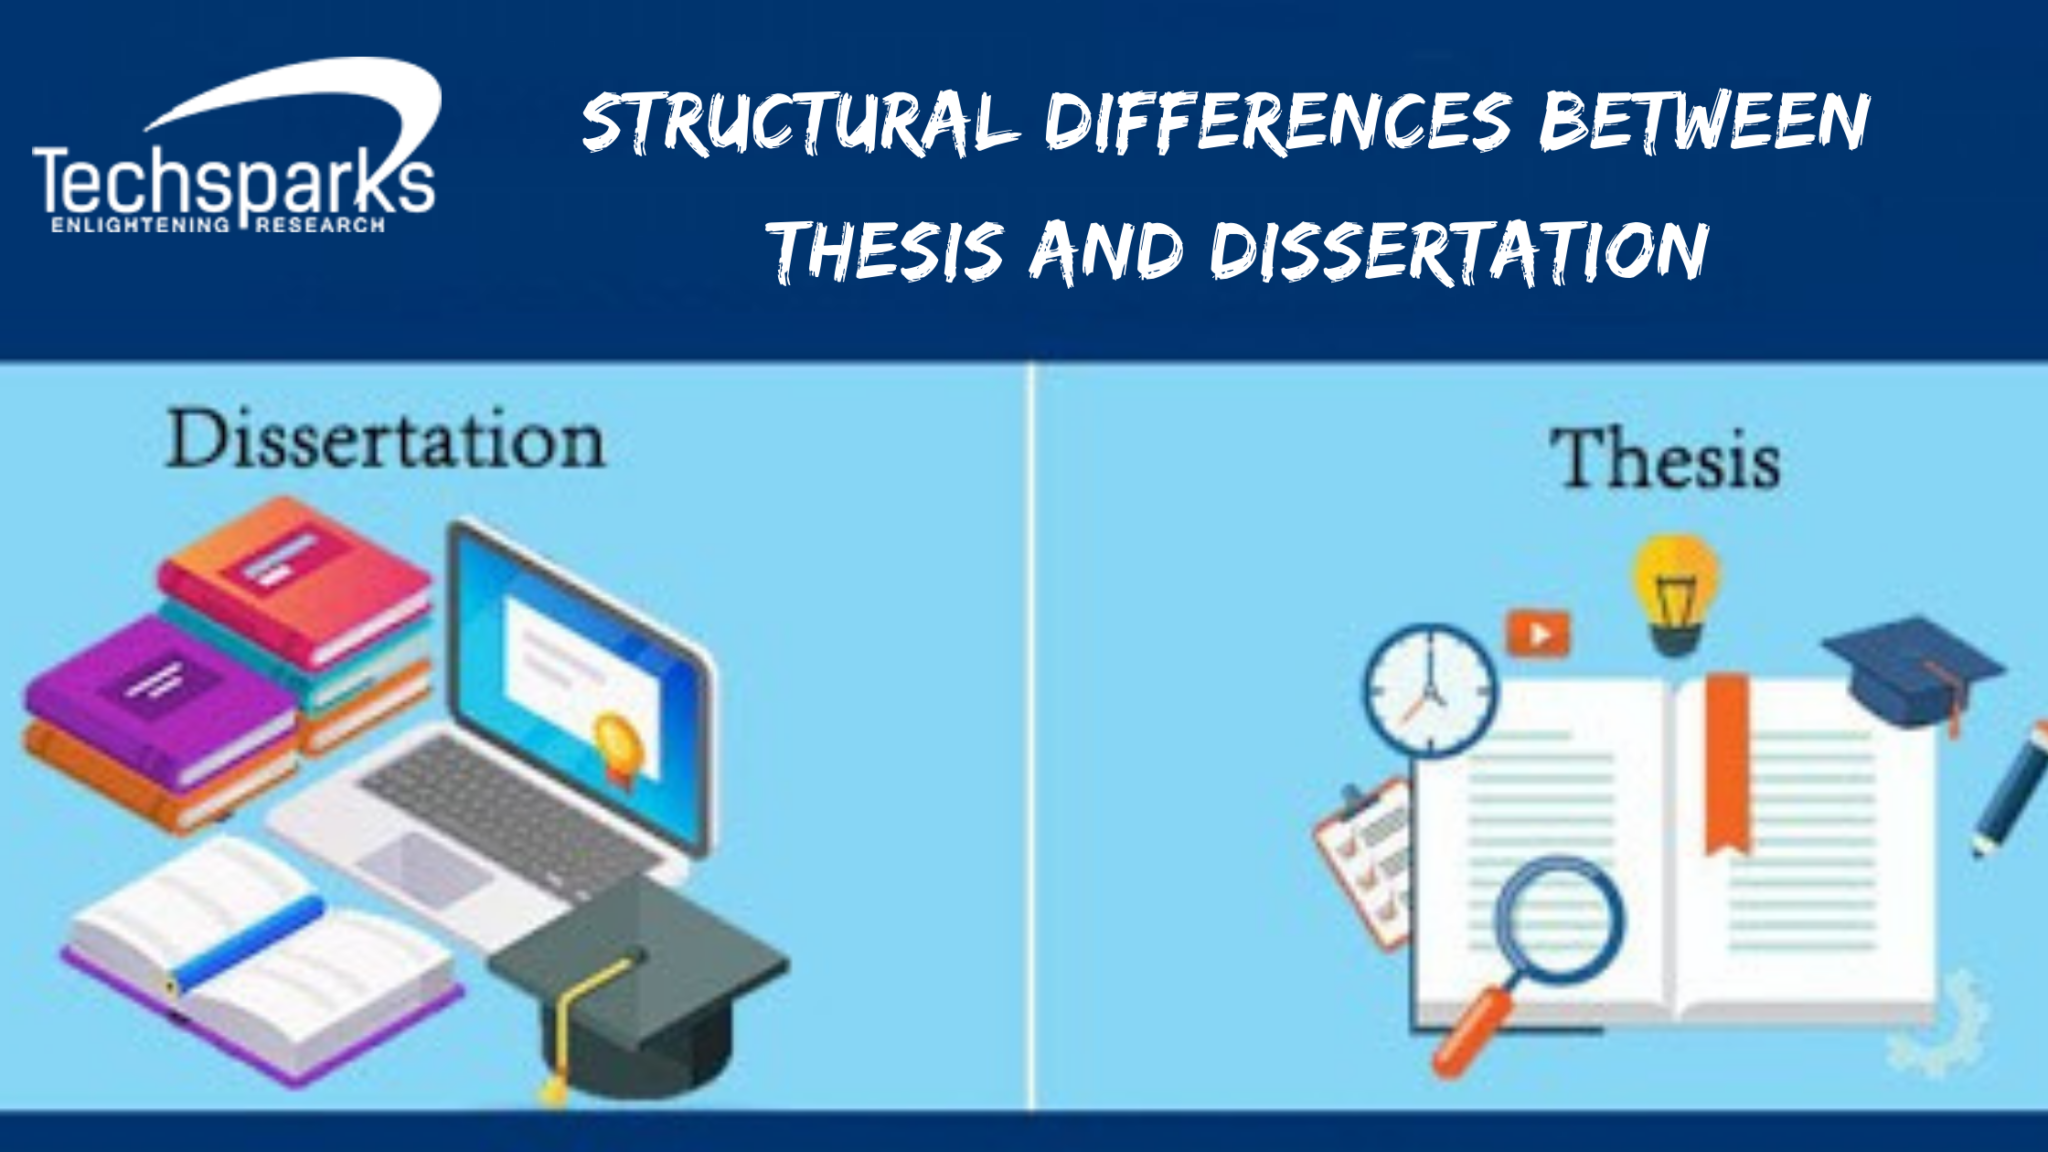 dissertation vs non thesis